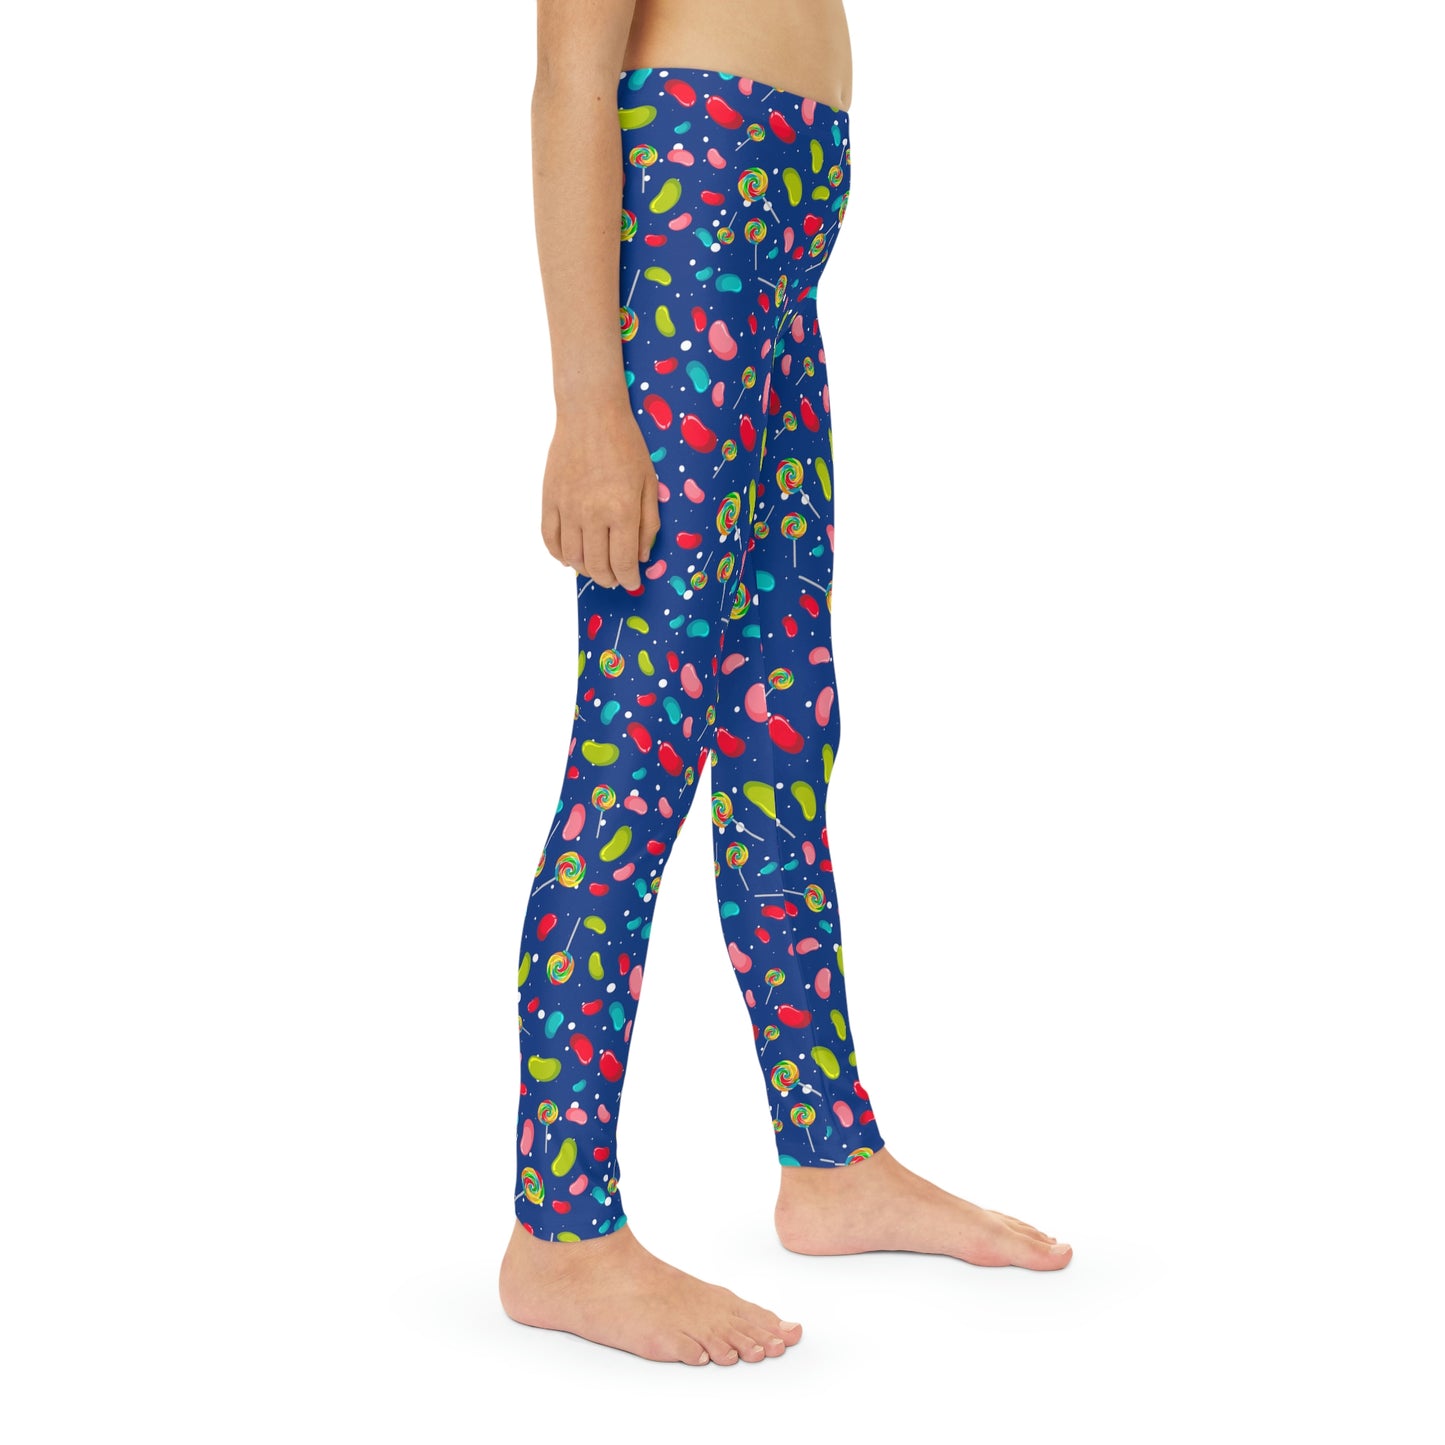 Candy Youth Full-Length Leggings, Printed Leggings, Party Leggings, lollipop leggings